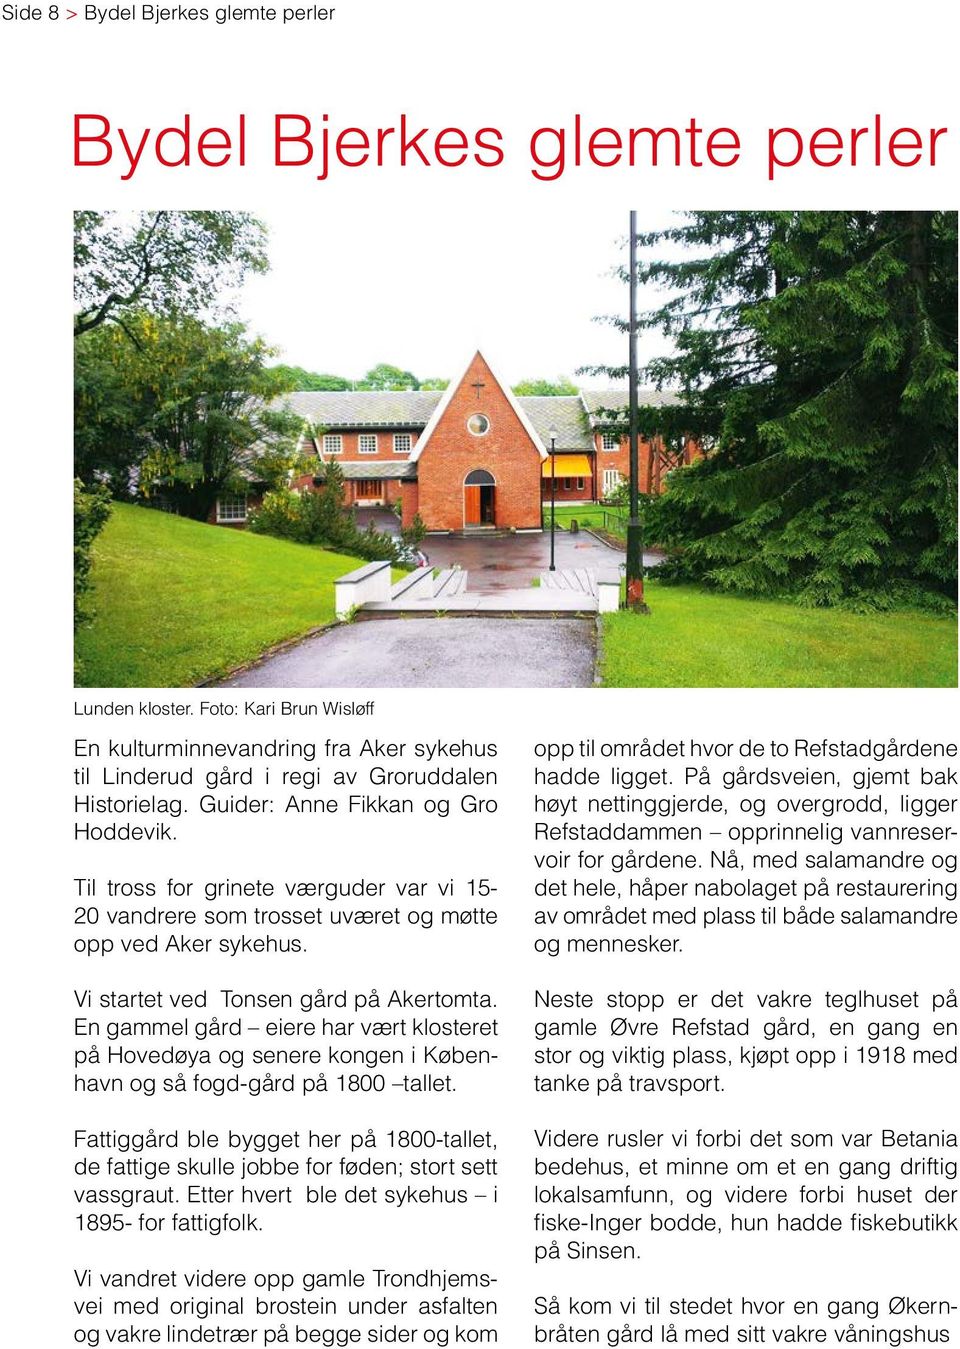 En gammel gård eiere har vært klosteret på Hovedøya og senere kongen i København og så fogd-gård på 1800 tallet.